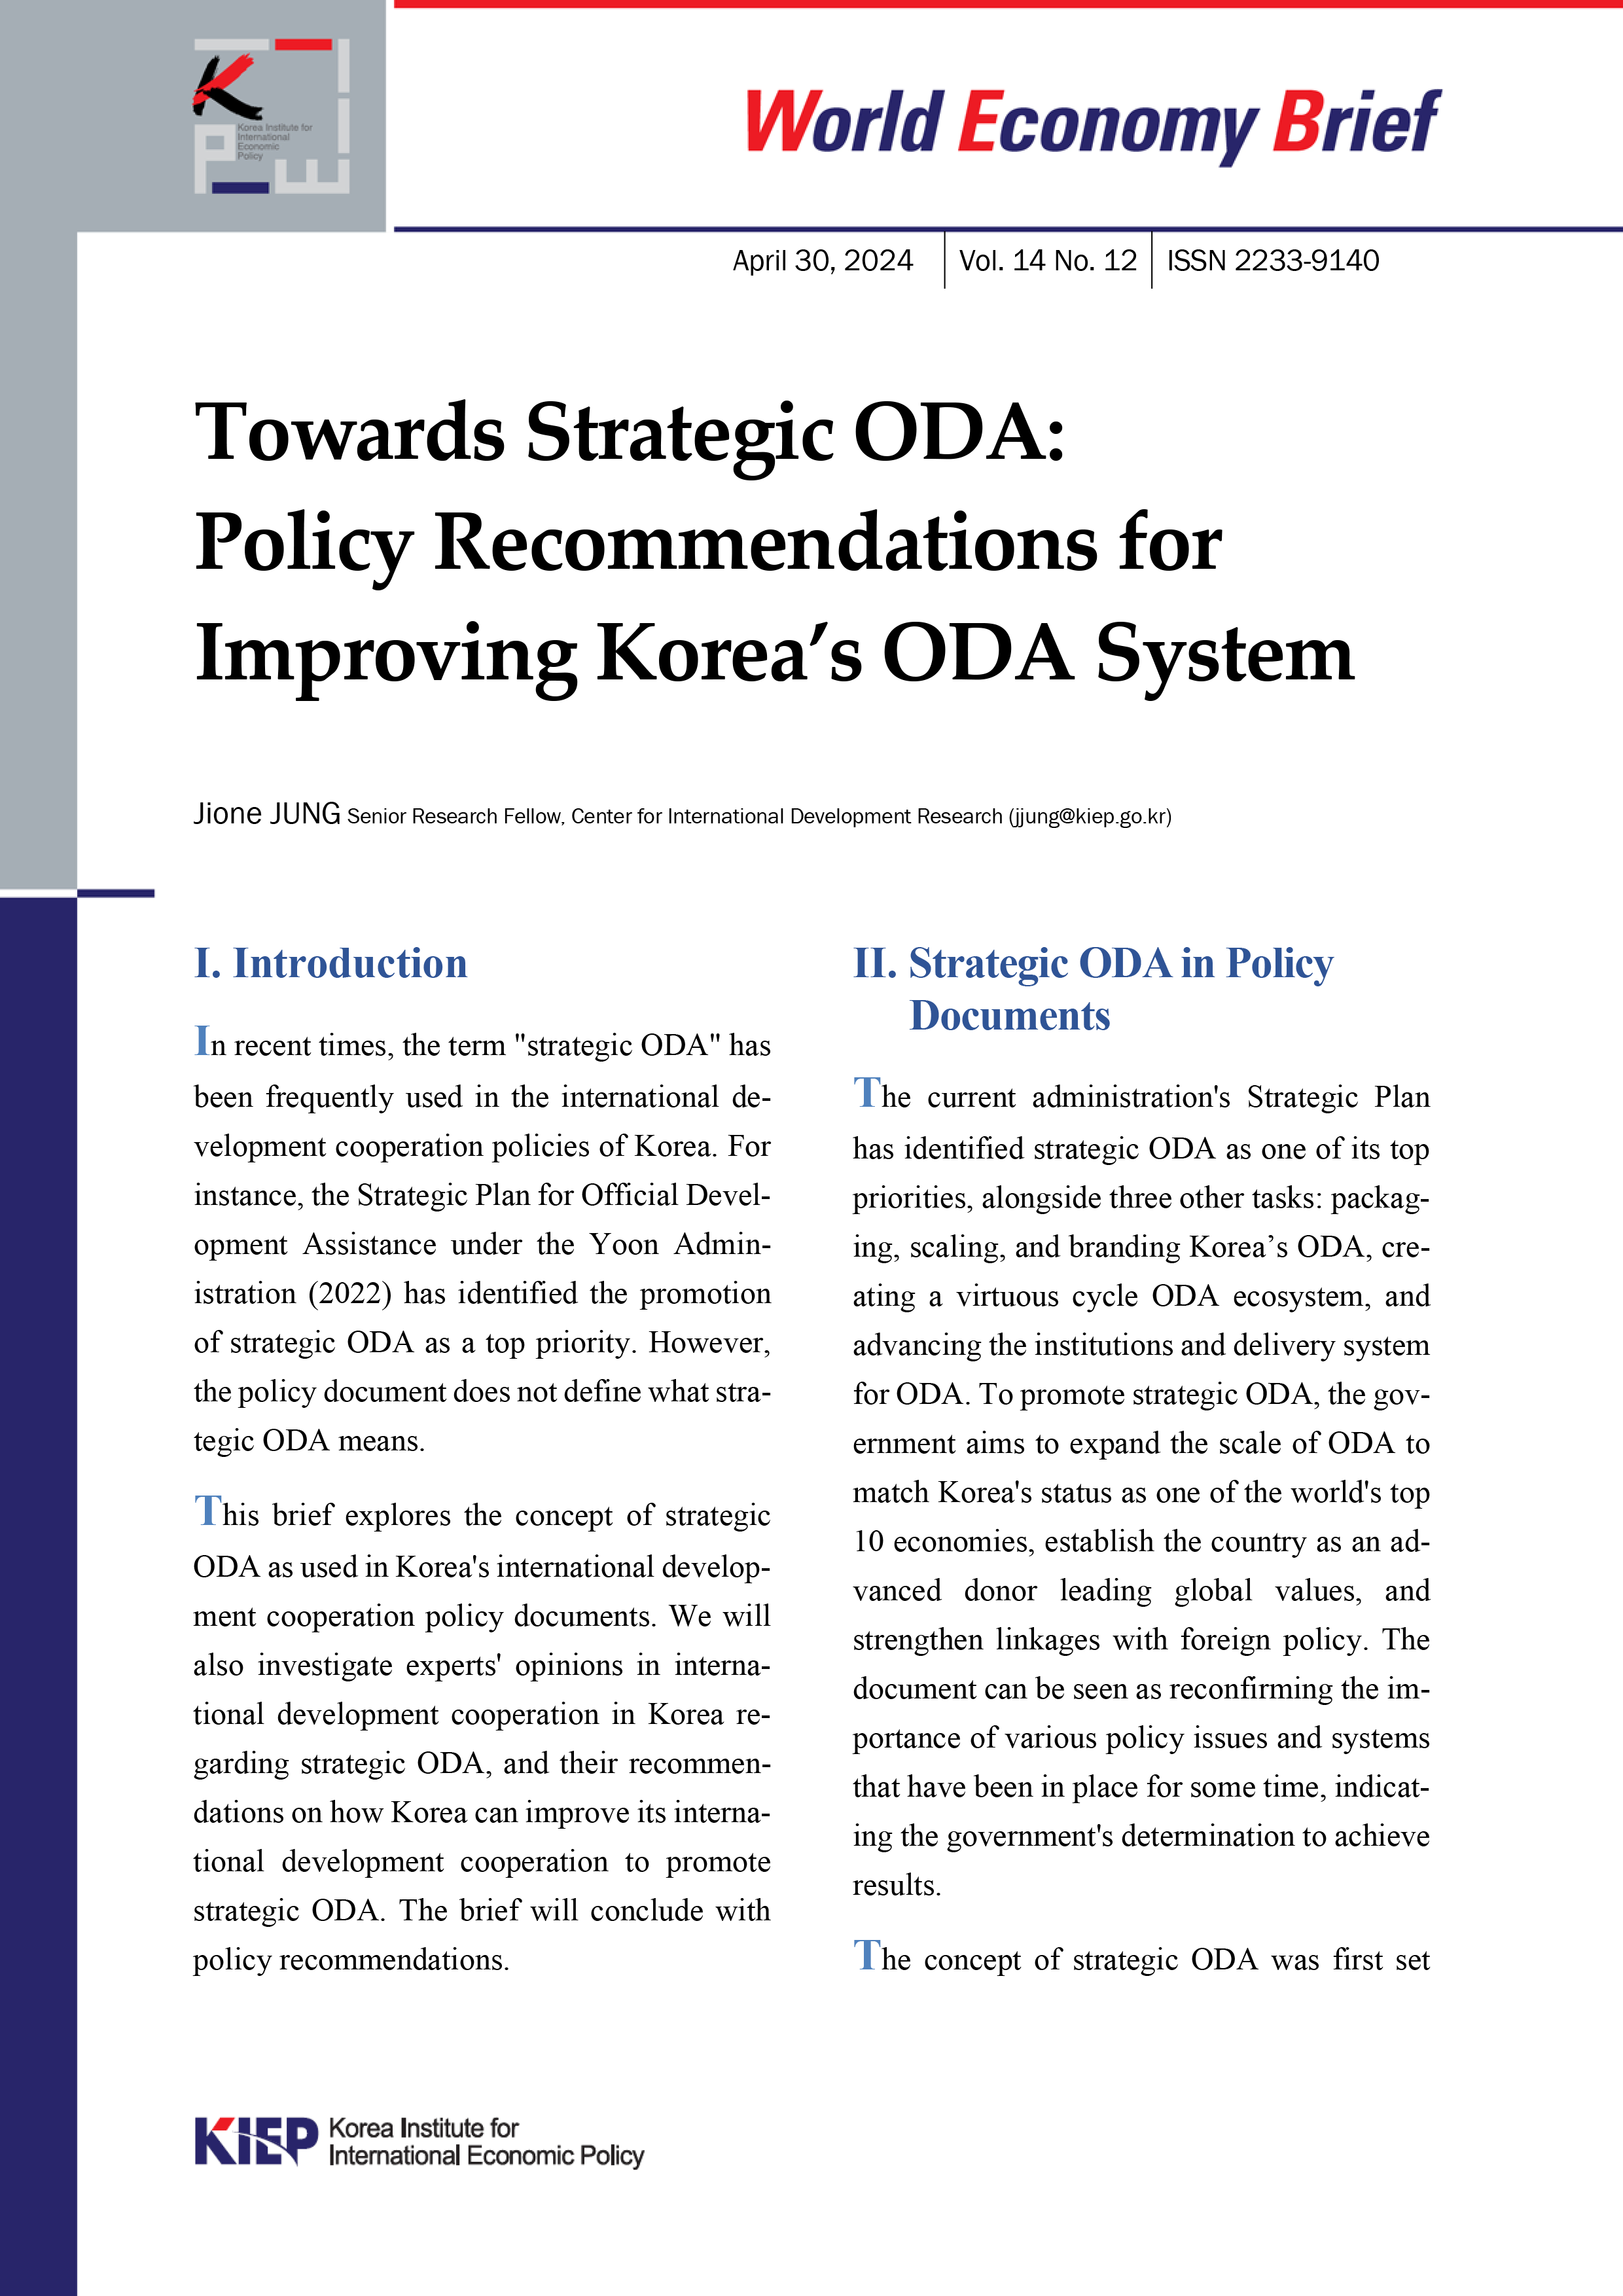 Towards Strategic ODA: Policy Recommendations for Improving Korea’s ODA System